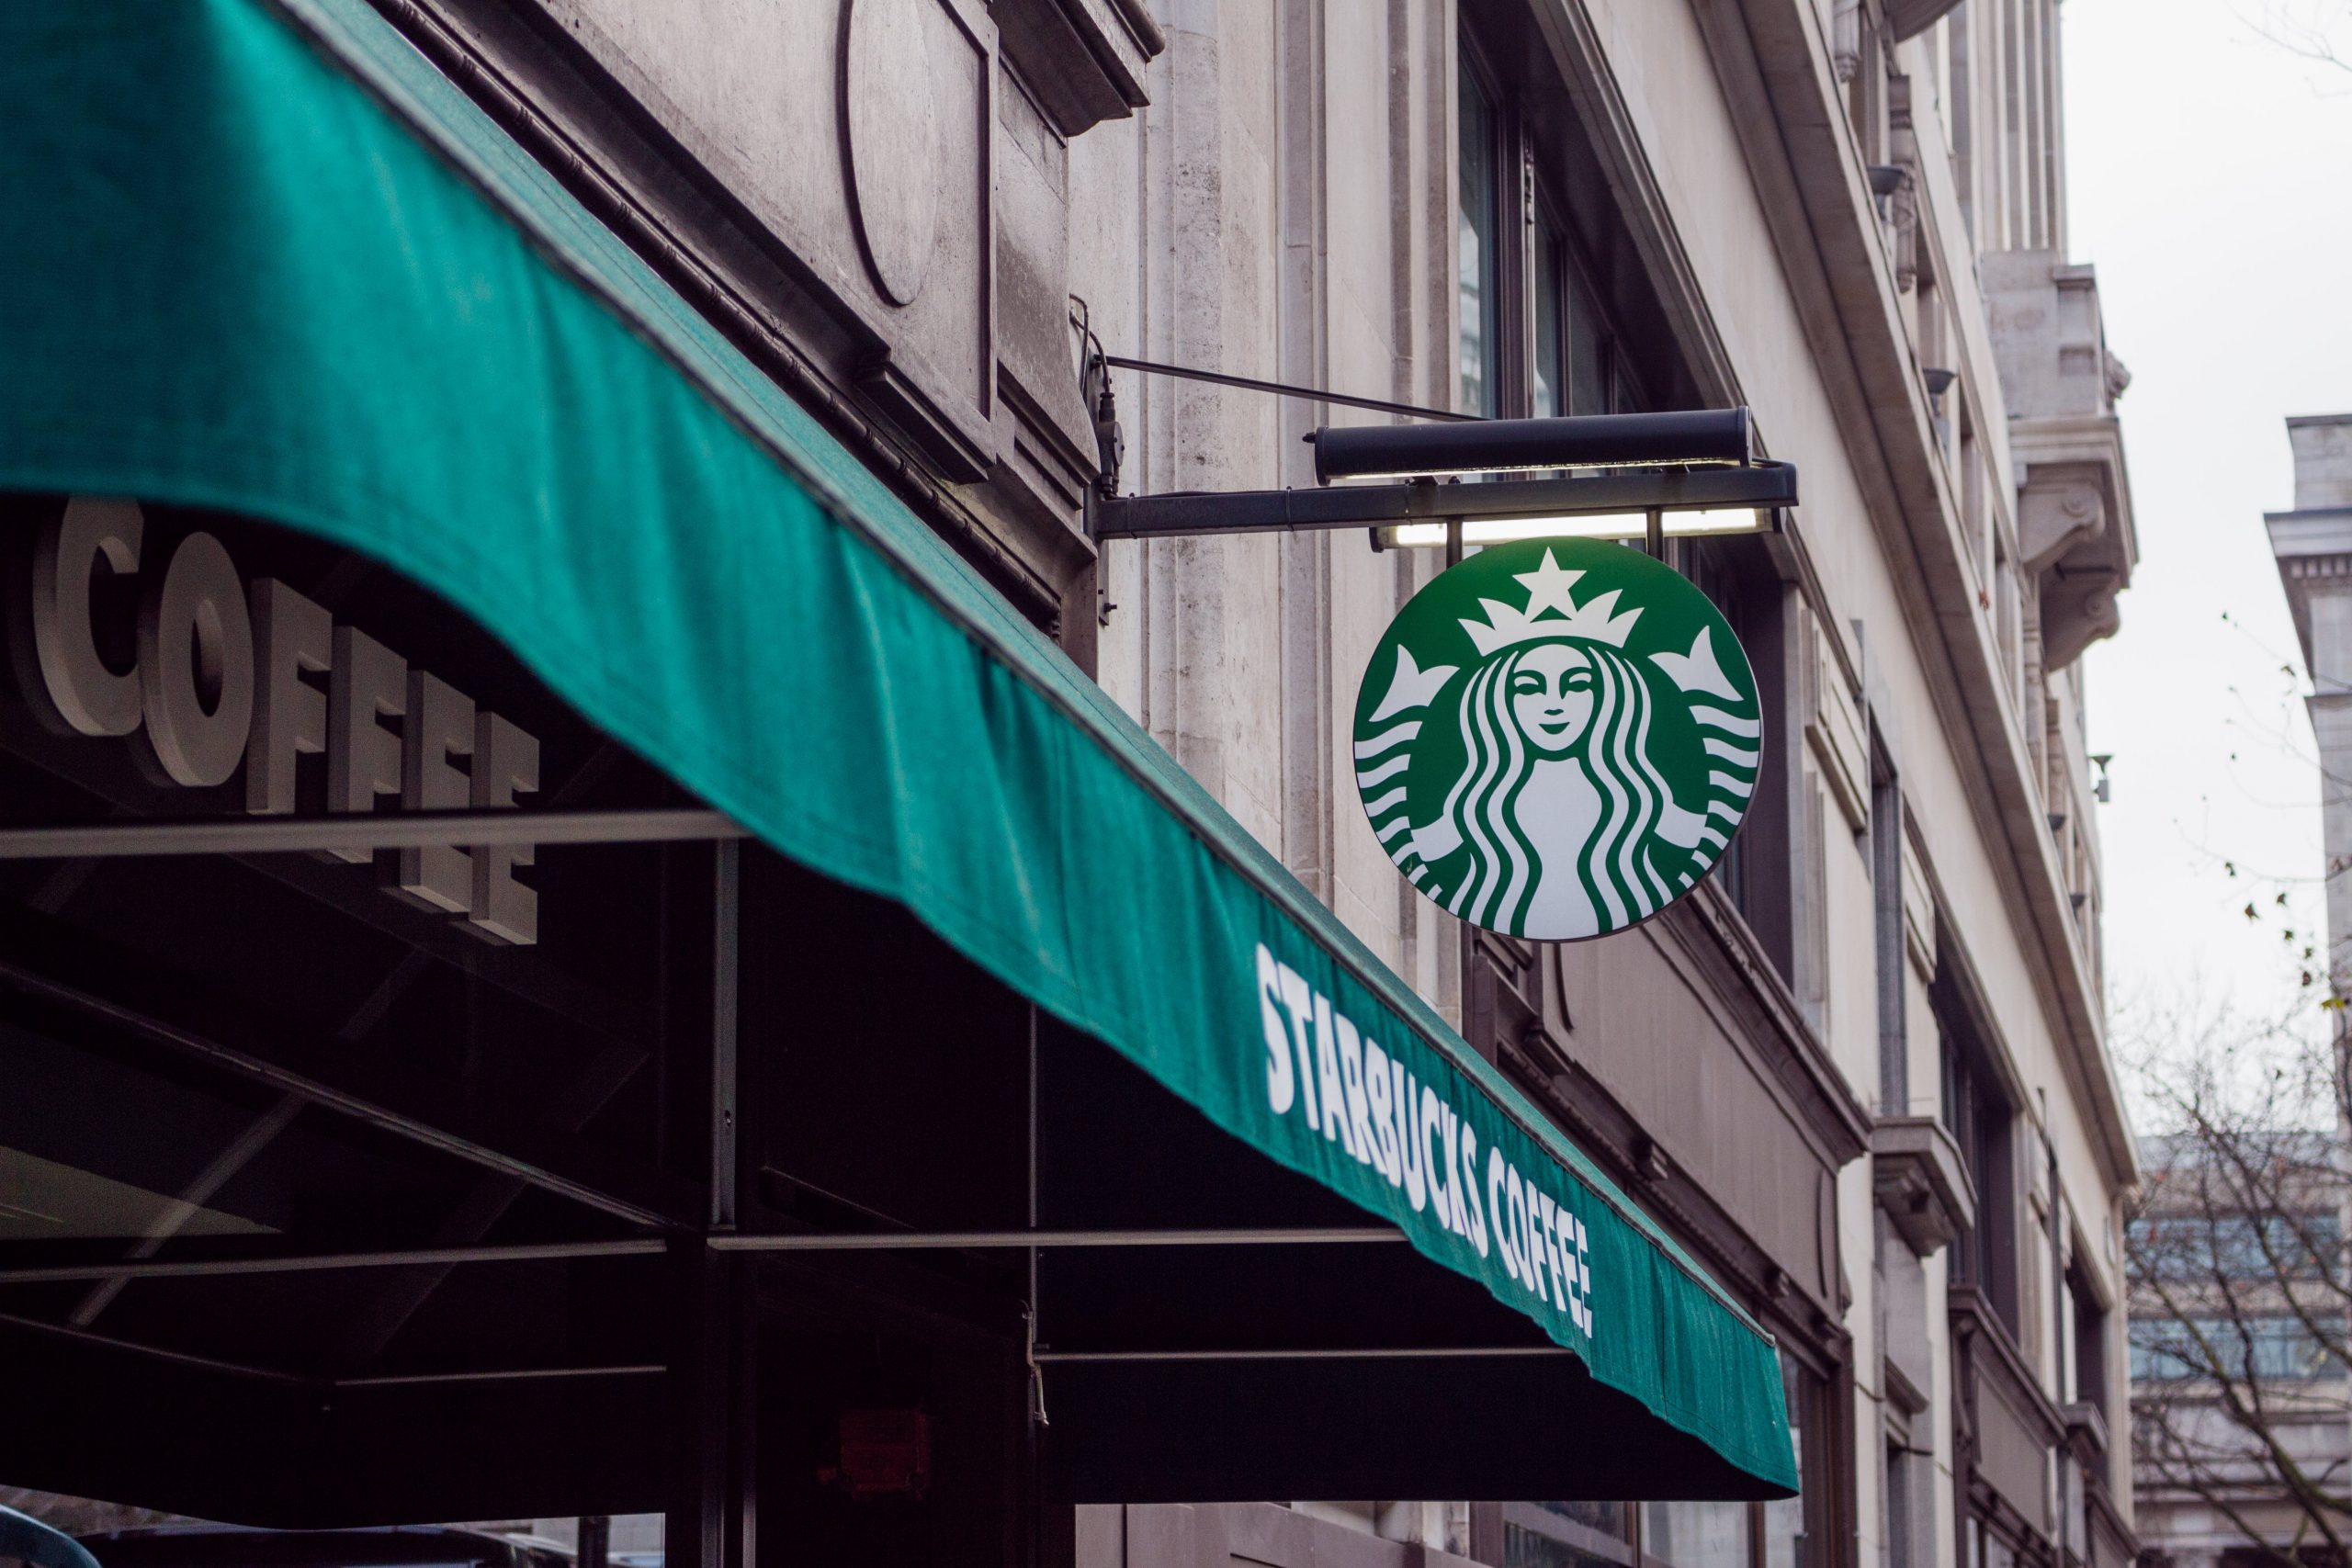 Starbucks: franchise in Brazil lost brand license on October 13